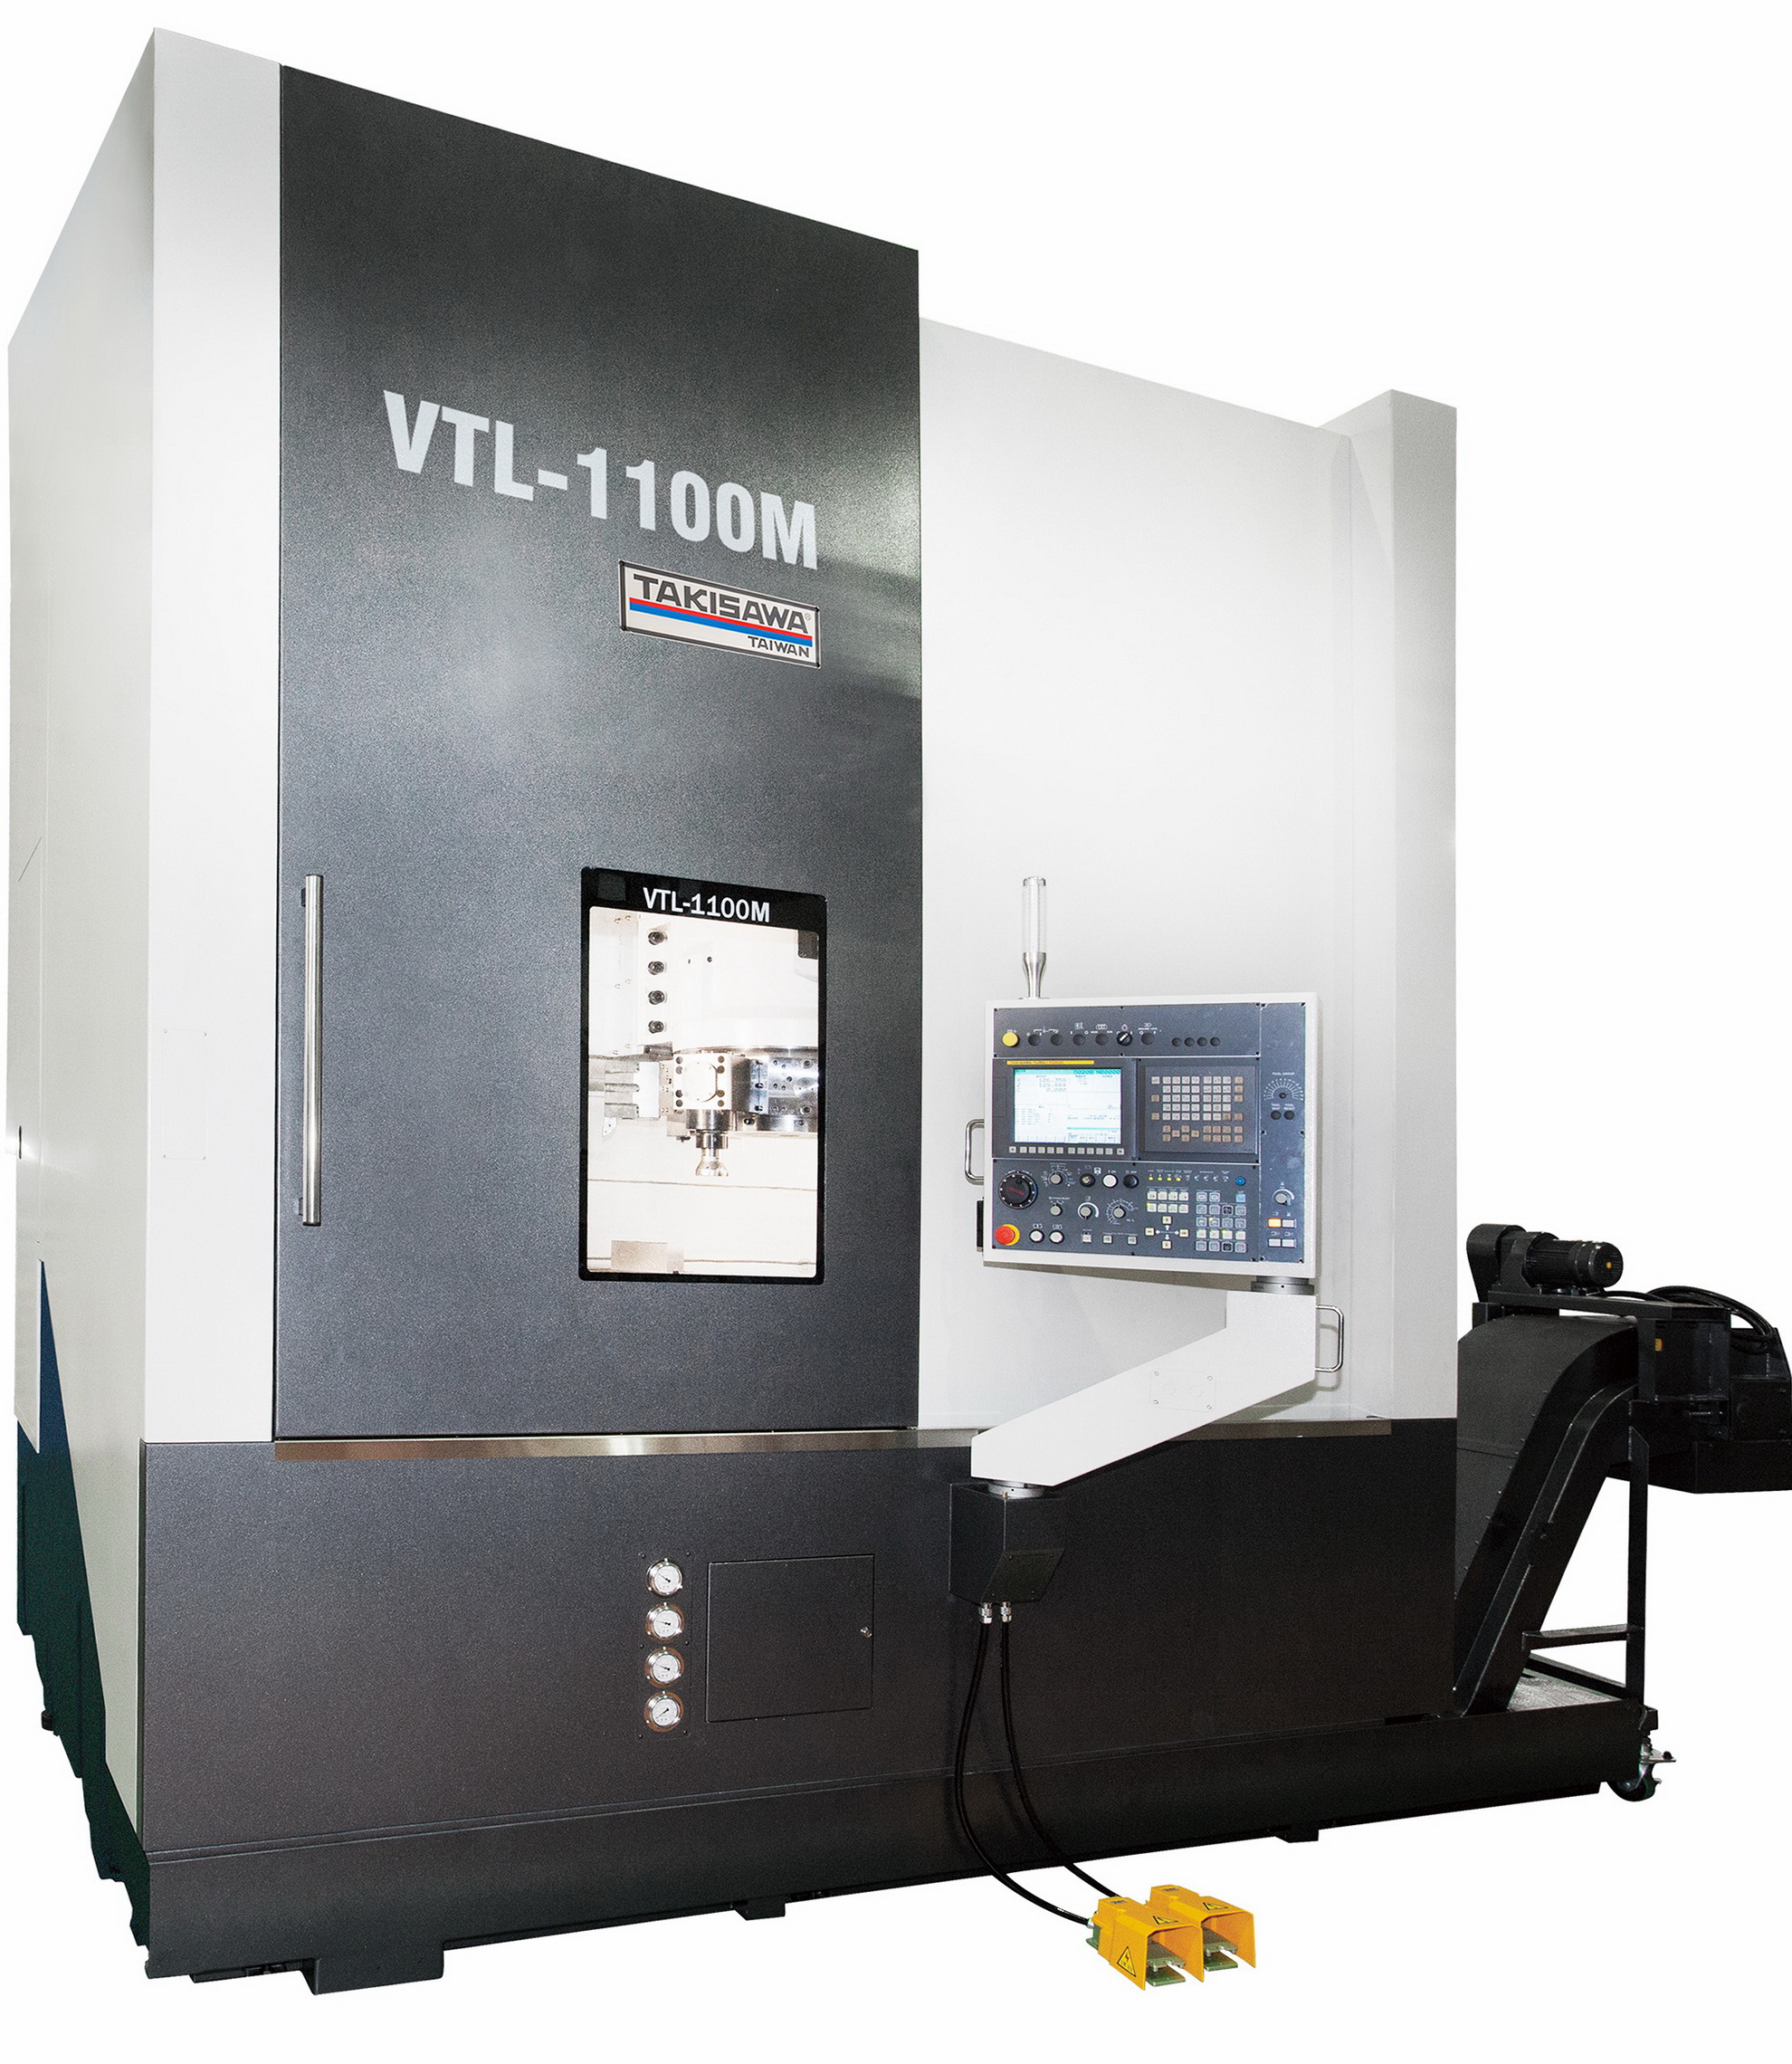 VTL-1100M